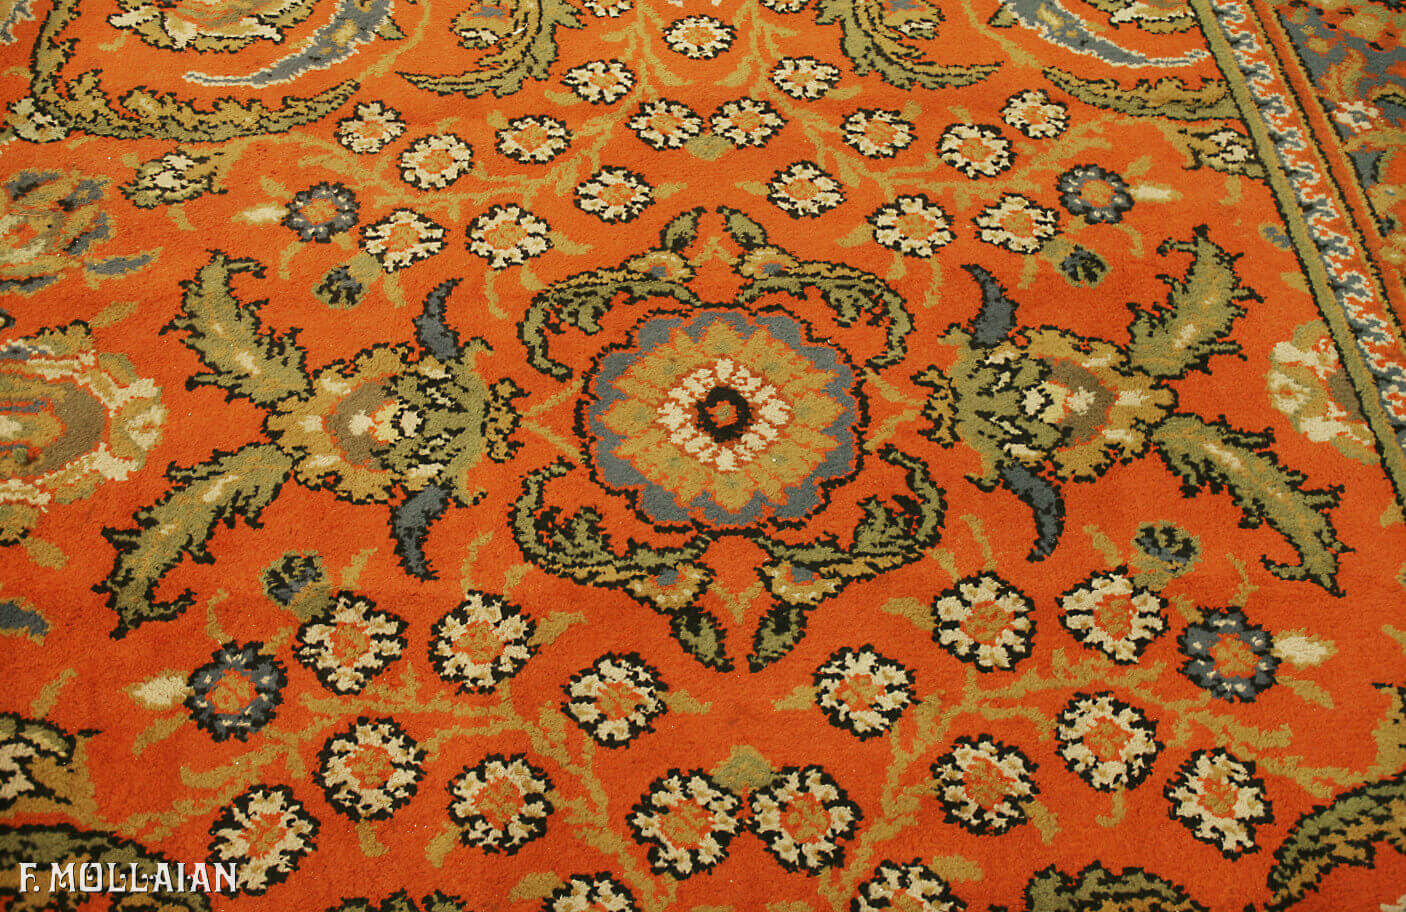 A Large Semi-Antique European Carpet n°:34580209